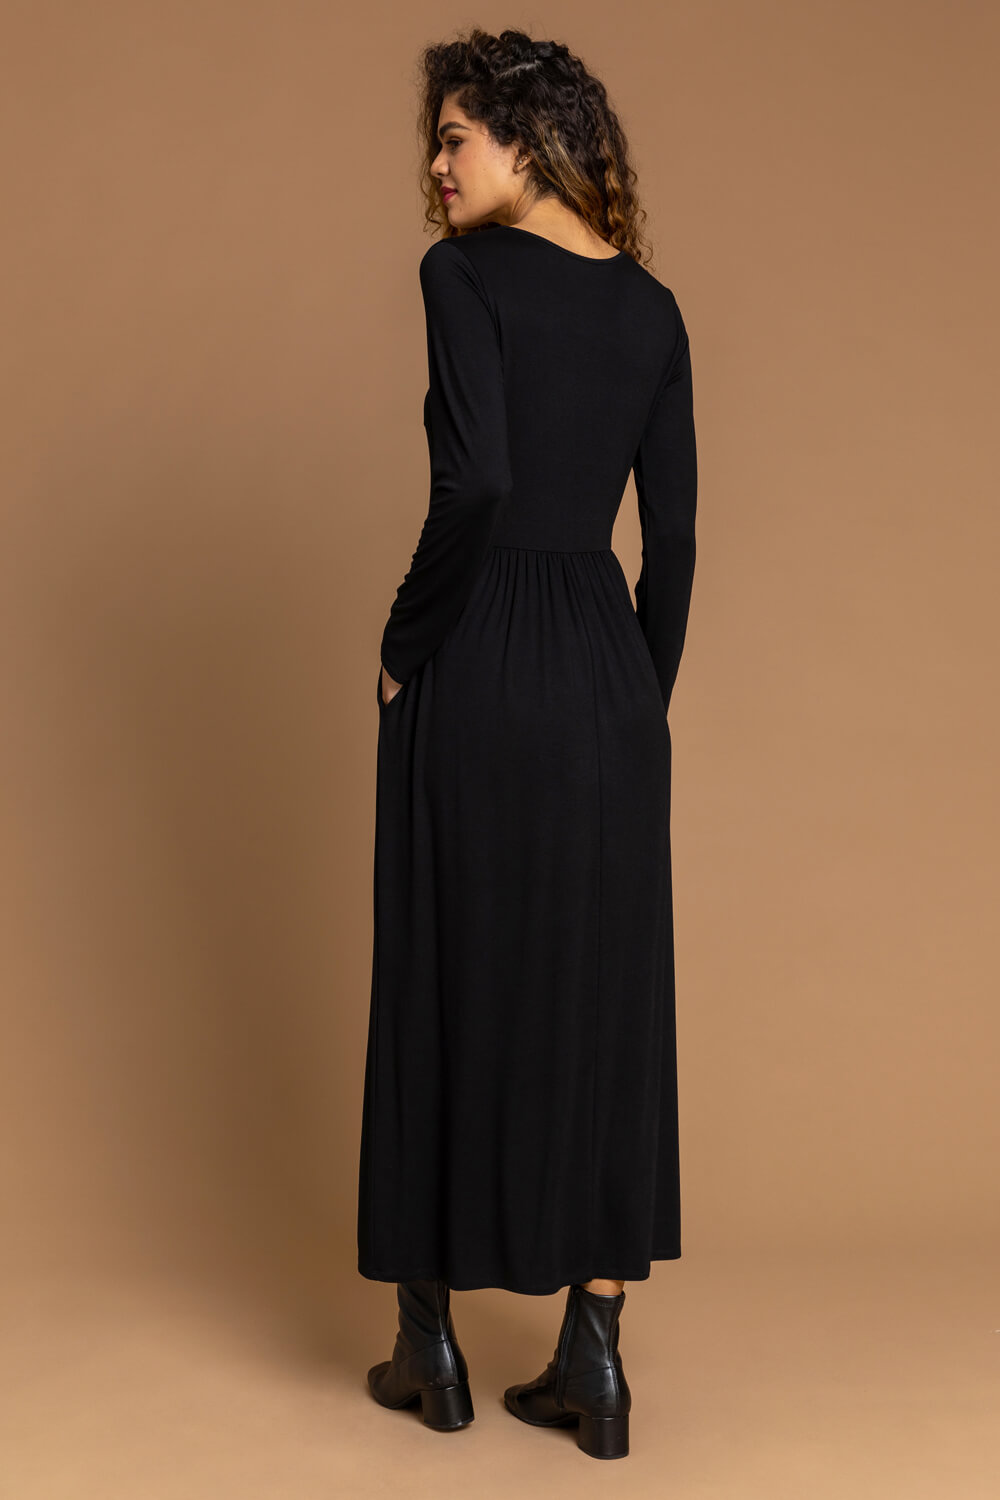 Black Long Sleeve Jersey Maxi Dress, Image 2 of 4